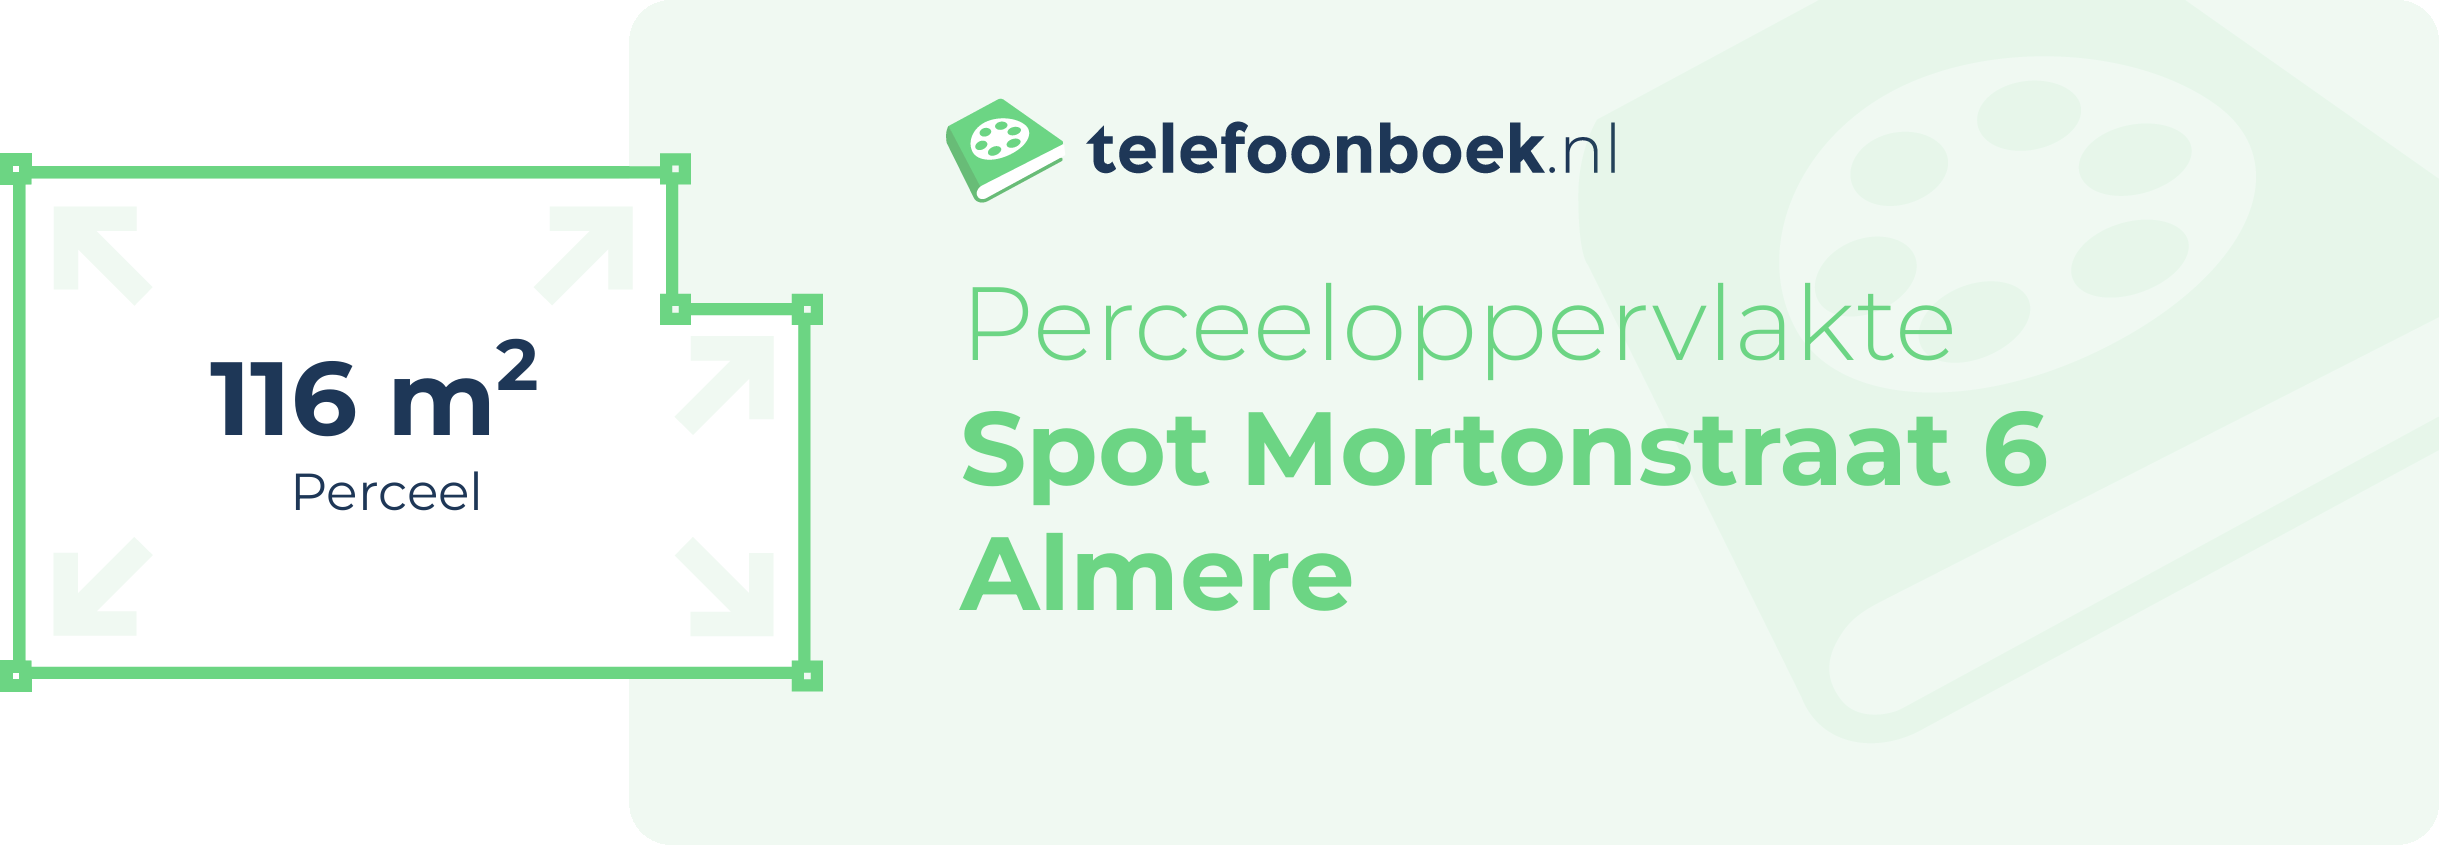 Perceeloppervlakte Spot Mortonstraat 6 Almere